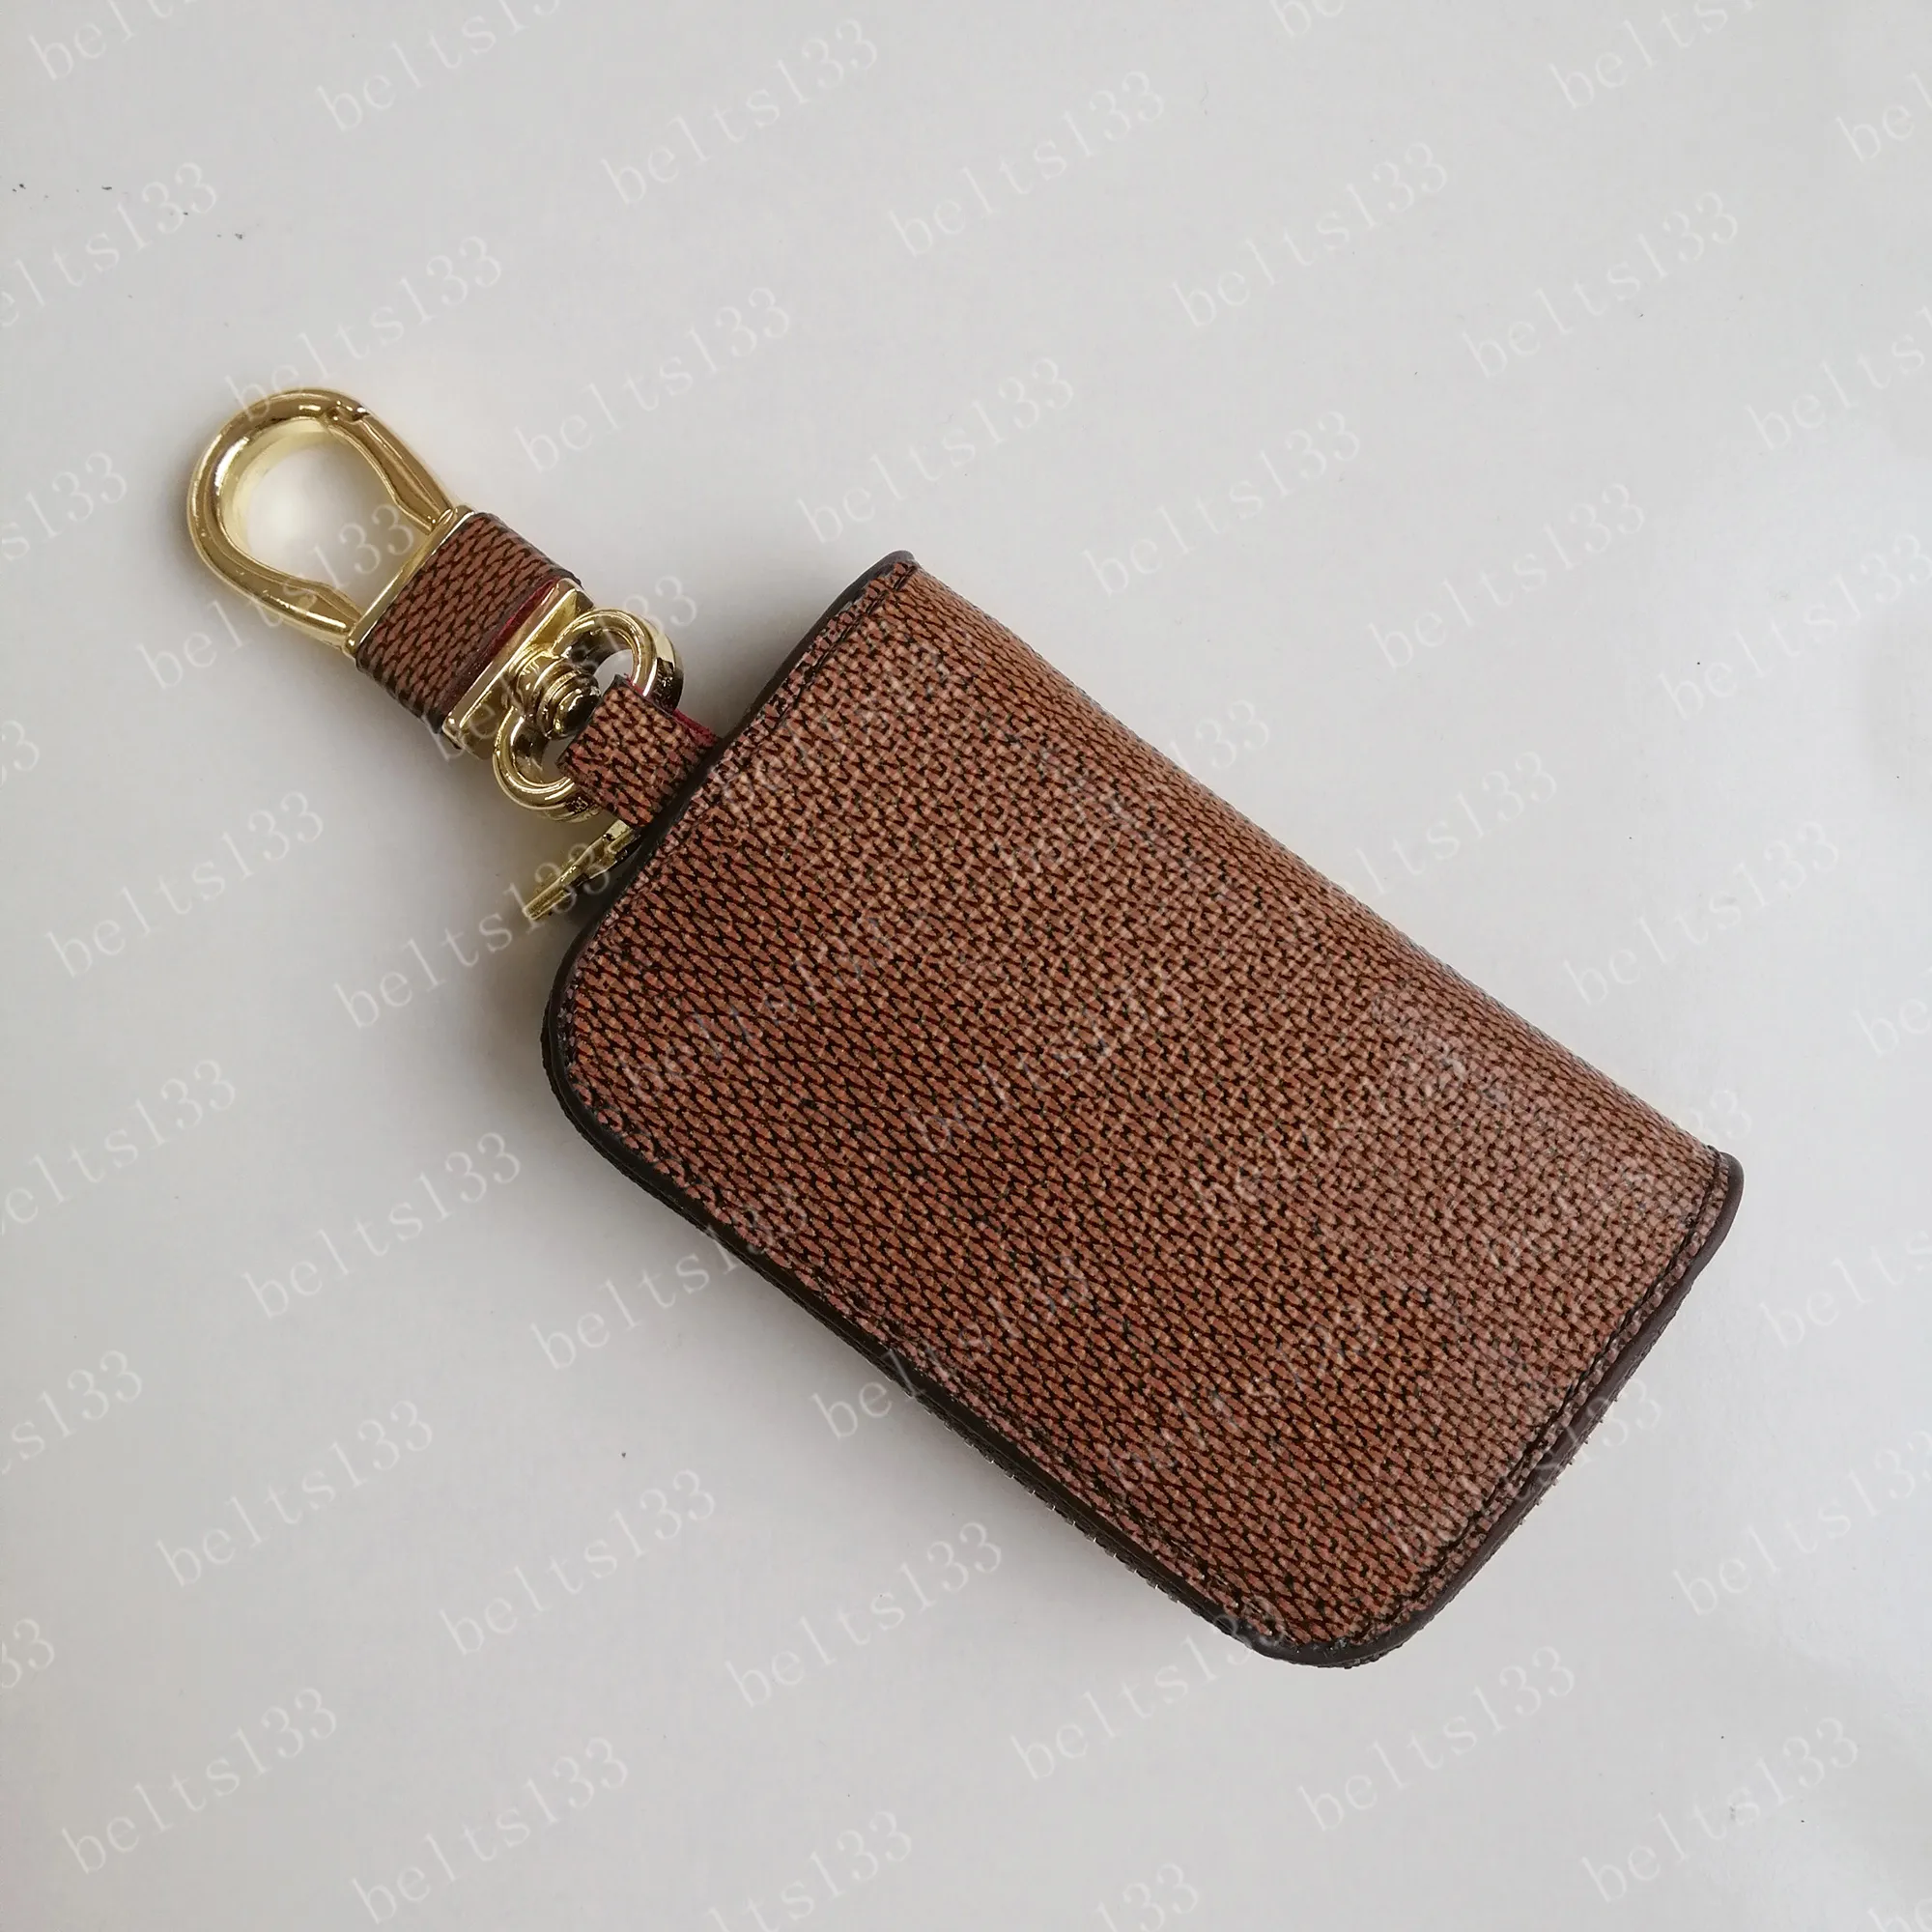 2022 Key Buckle Bag lovers Car Keychain Handmade Leather Keychains Fashion brown Man Woman Purse Bags Pendant Accessories#LQB03290L